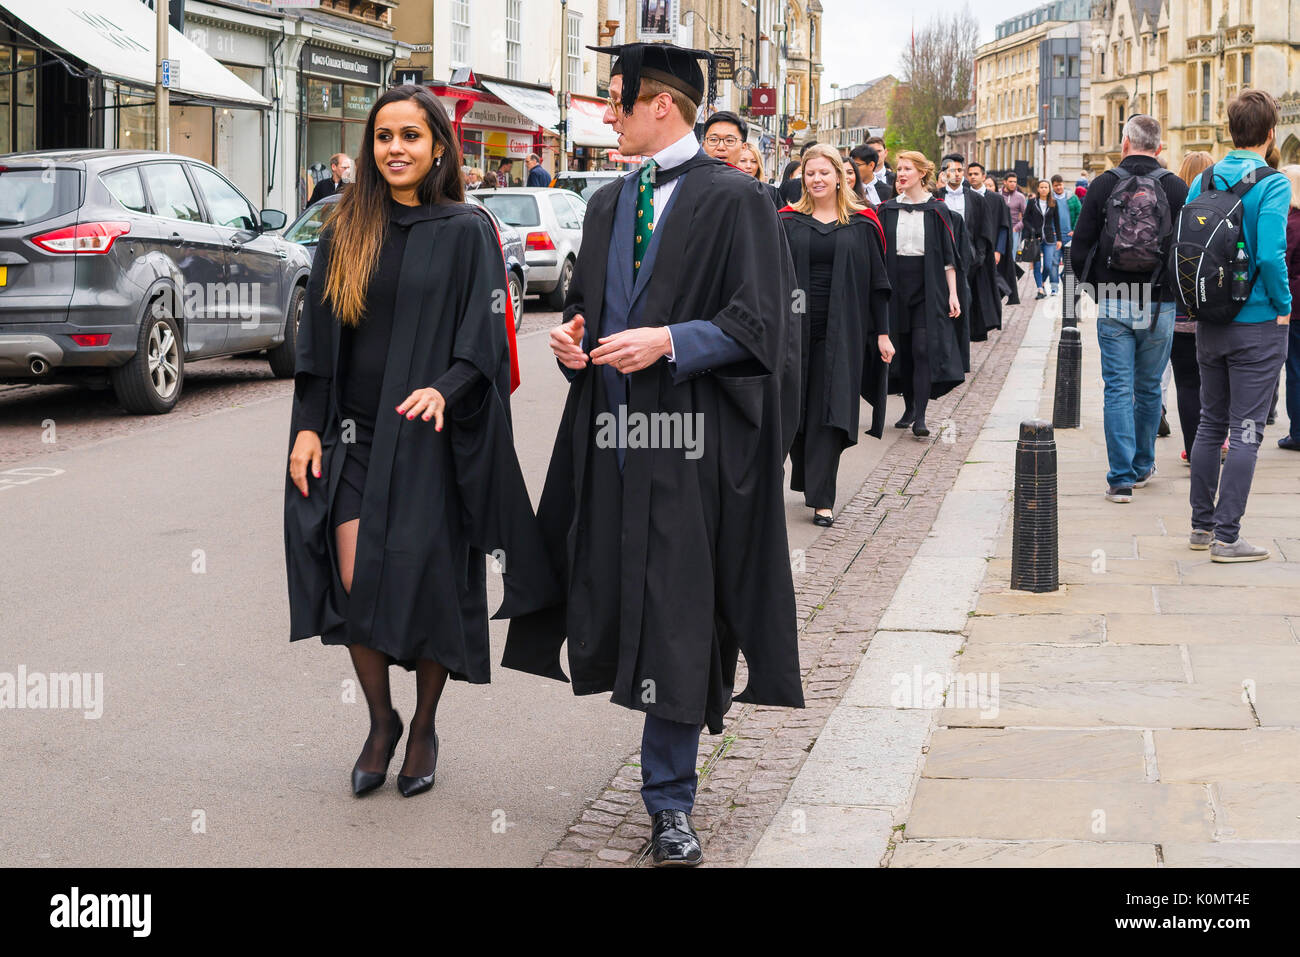 Cambridge students UK, a group of Cambridge University undergraduates walk along King's Parade on their way to their graduation ceremony, England. Stock Photo